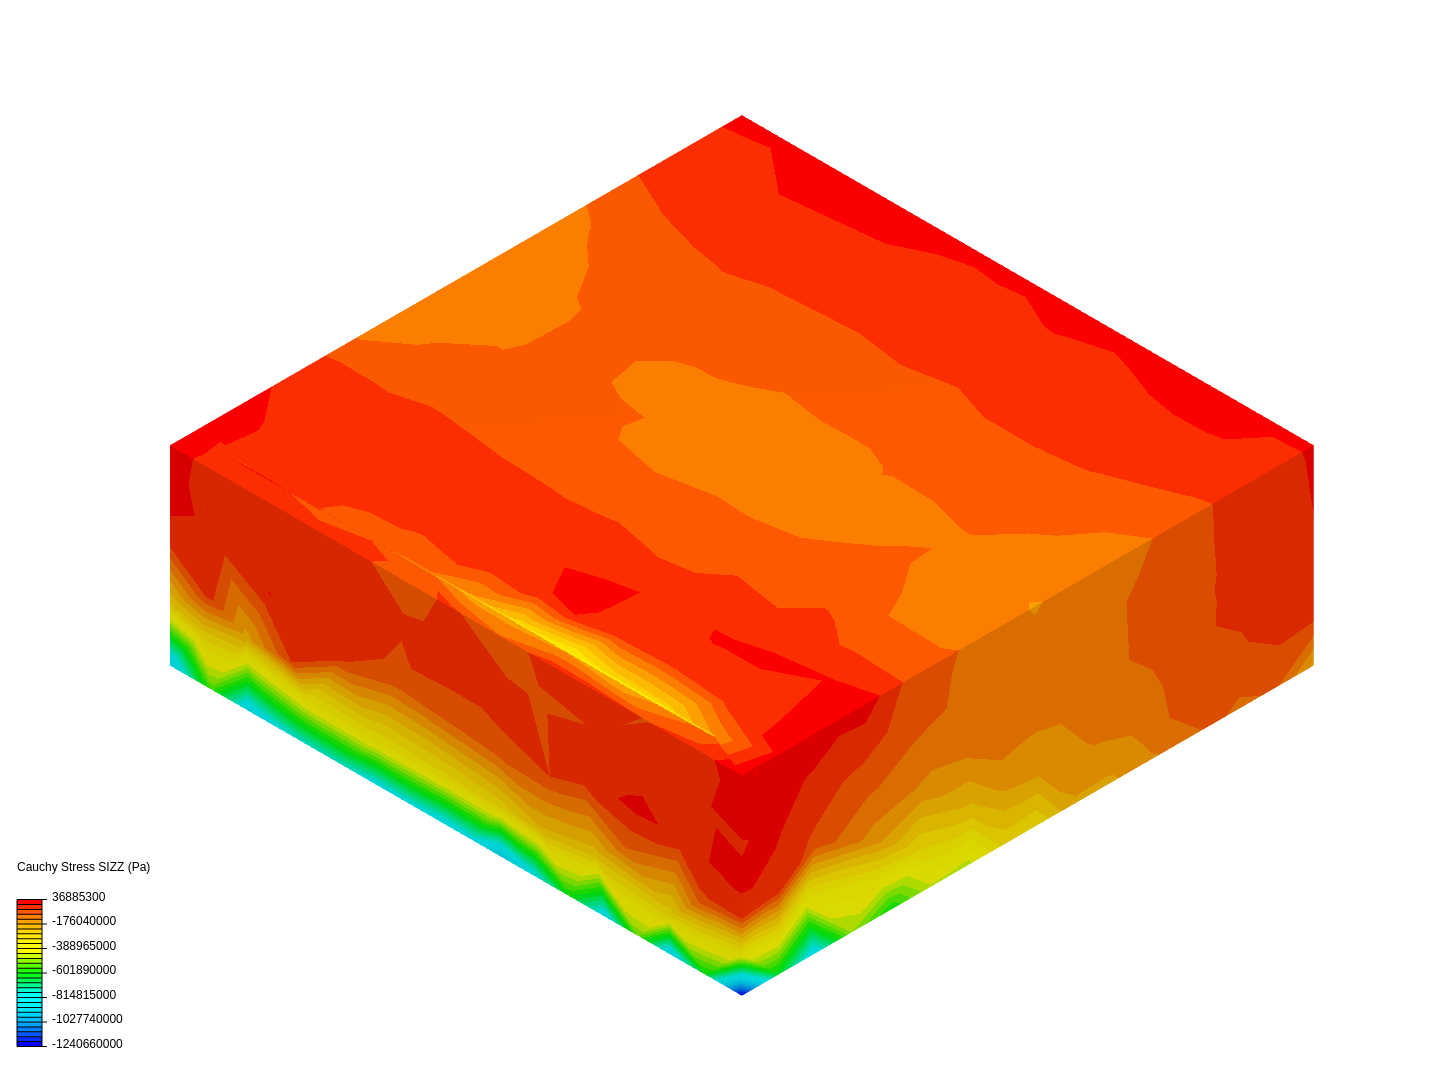 new heat simulation image